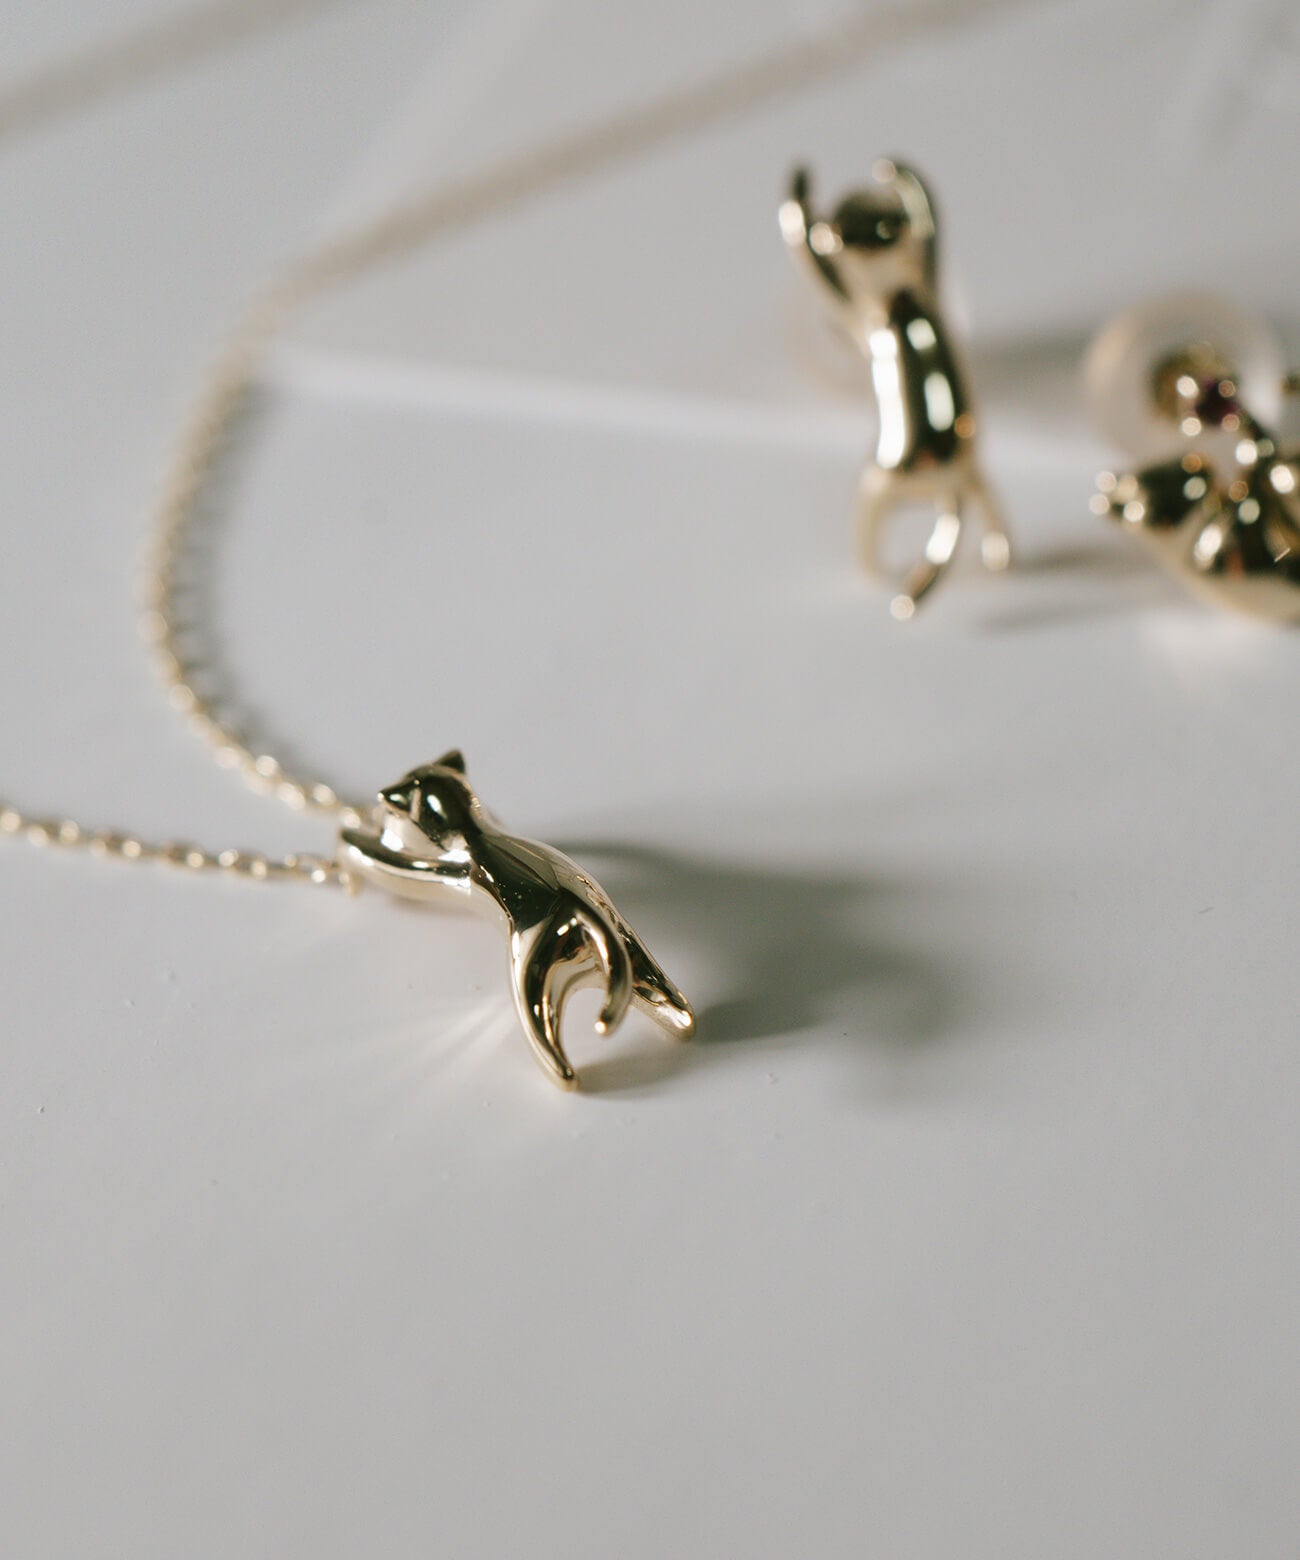 K10 Gold Cat Necklace  | ZOI-CAT NECKLACE